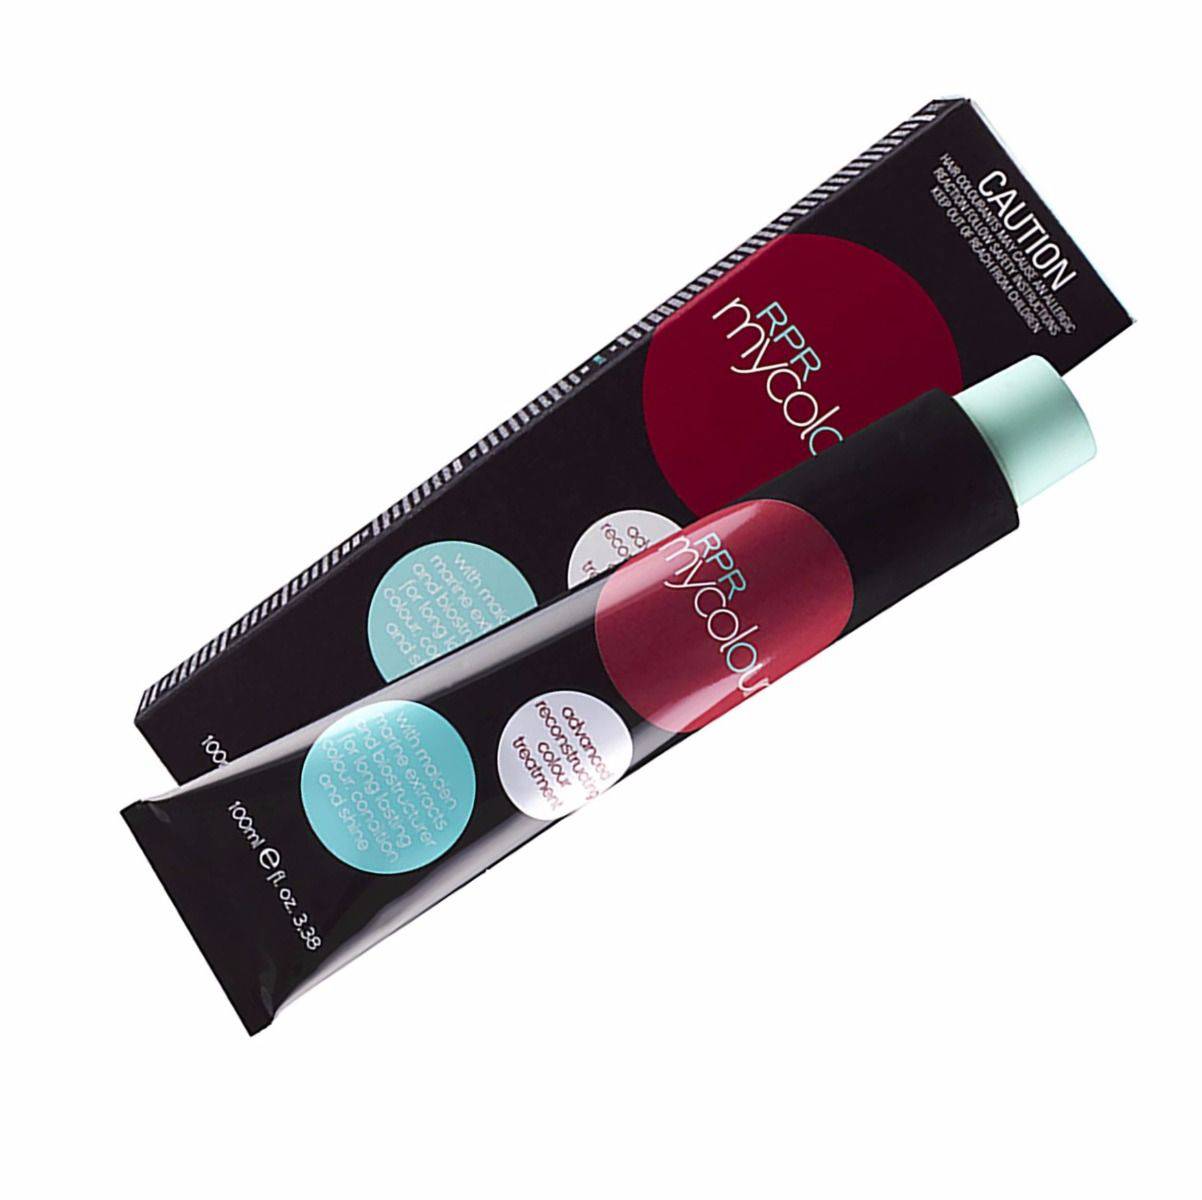 RPR My Colour 4.22 Level 4 Intense Violet 100g tube Mix 1:1.5 - On Line Hair Depot